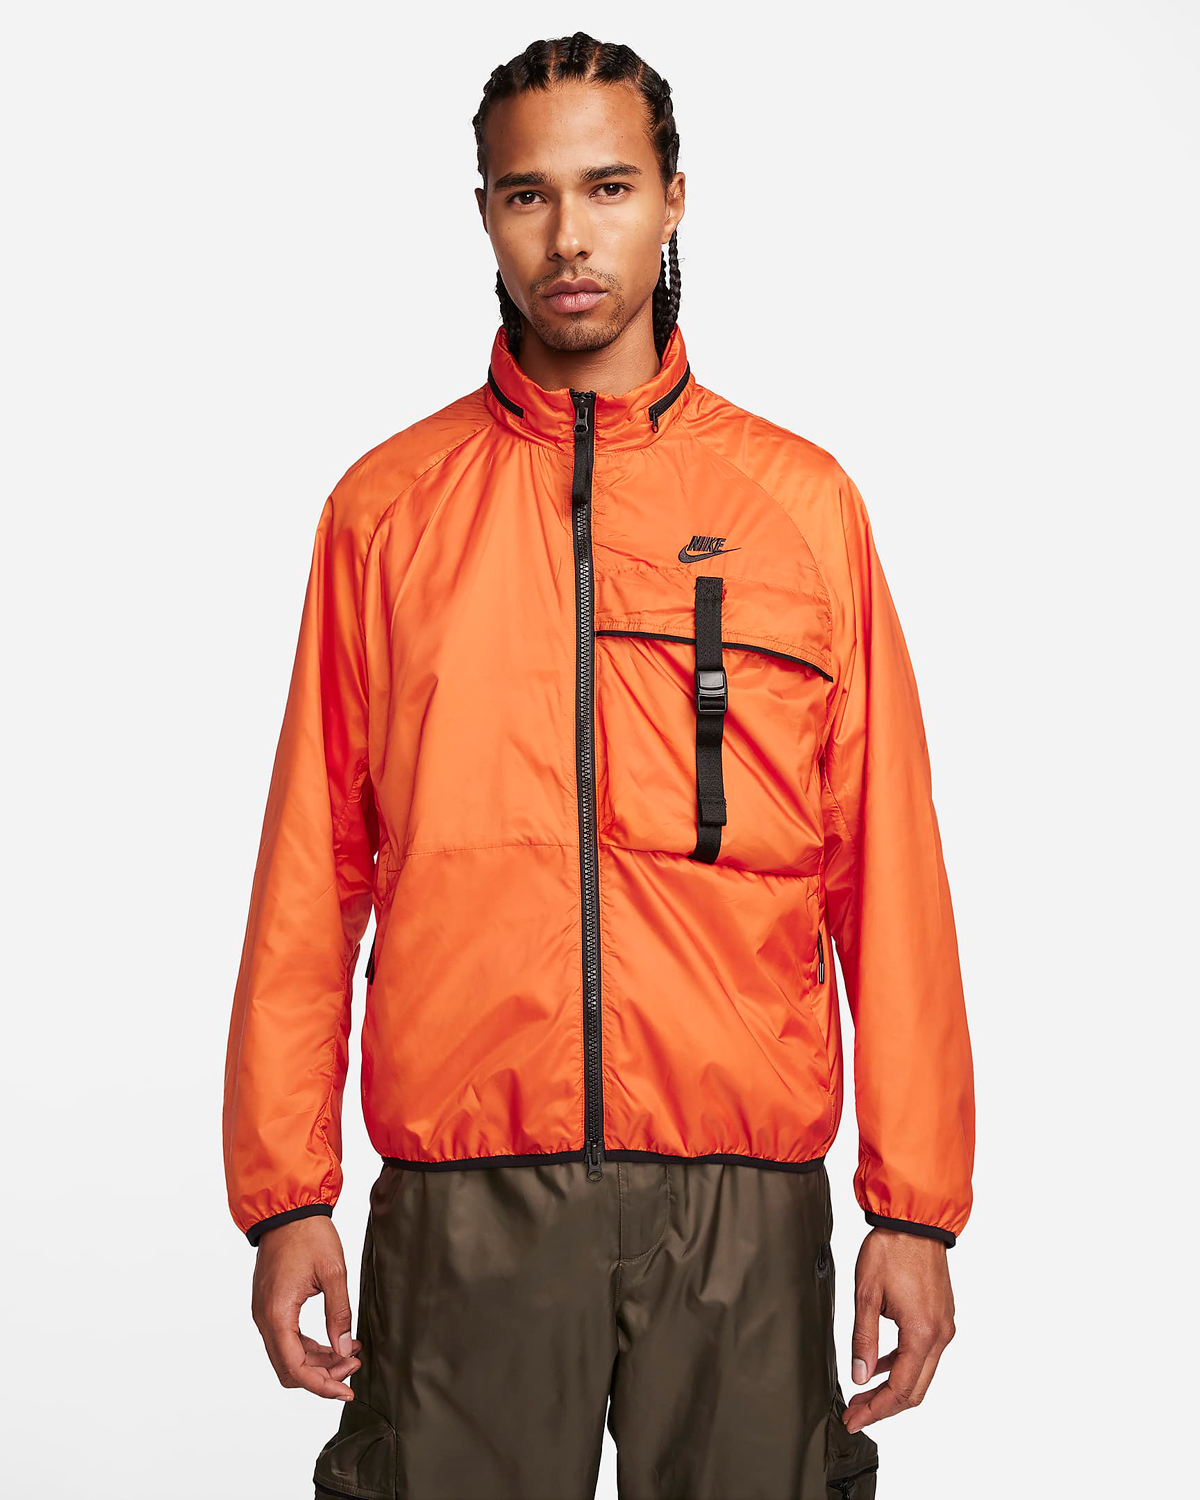 Nike-Tech-Woven-Jacket-Campfire-Orange